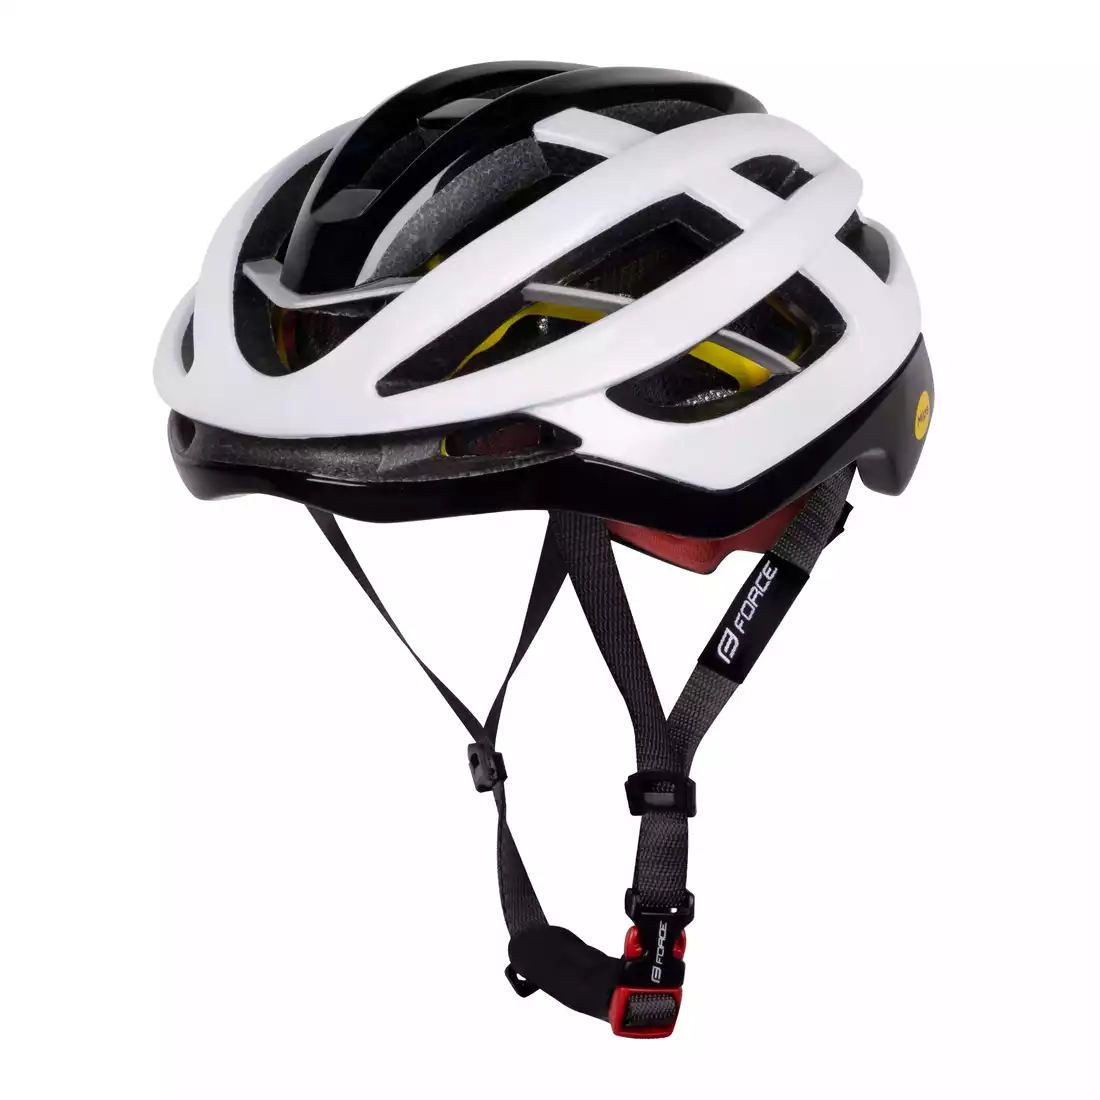 FORCE LYNX MIPS Bicycle helmet, black and white